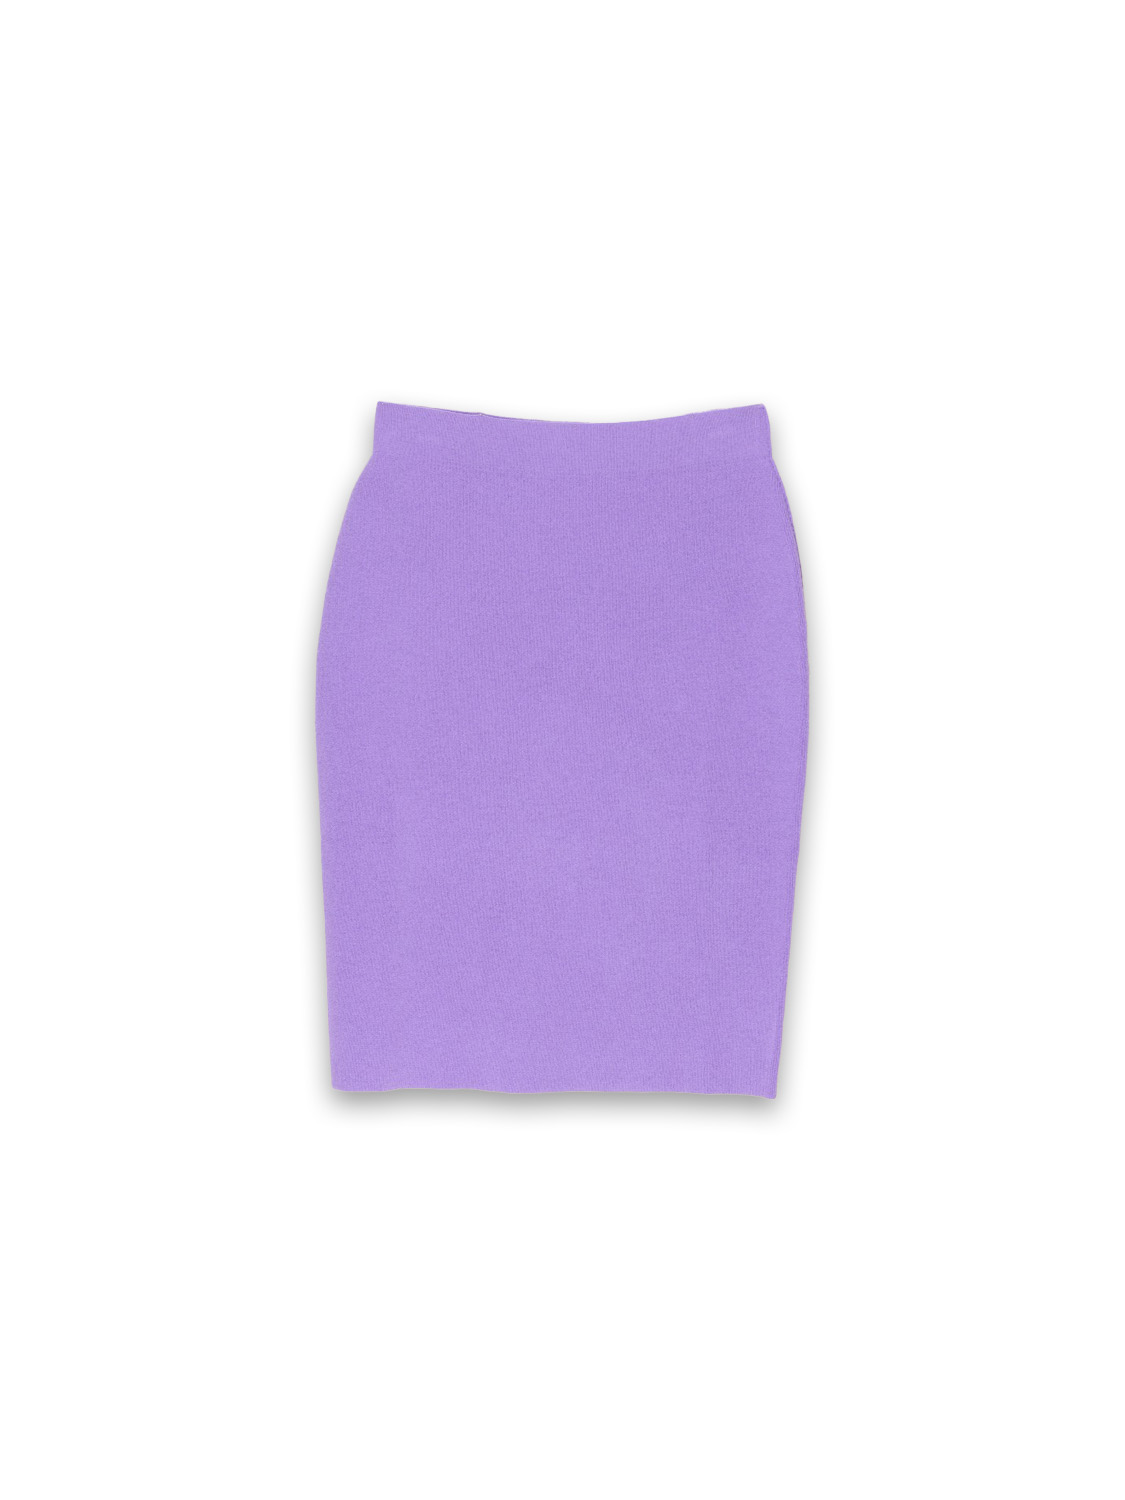 Iris von Arnim Ambella - Stretchy cashmere skirt  lila S